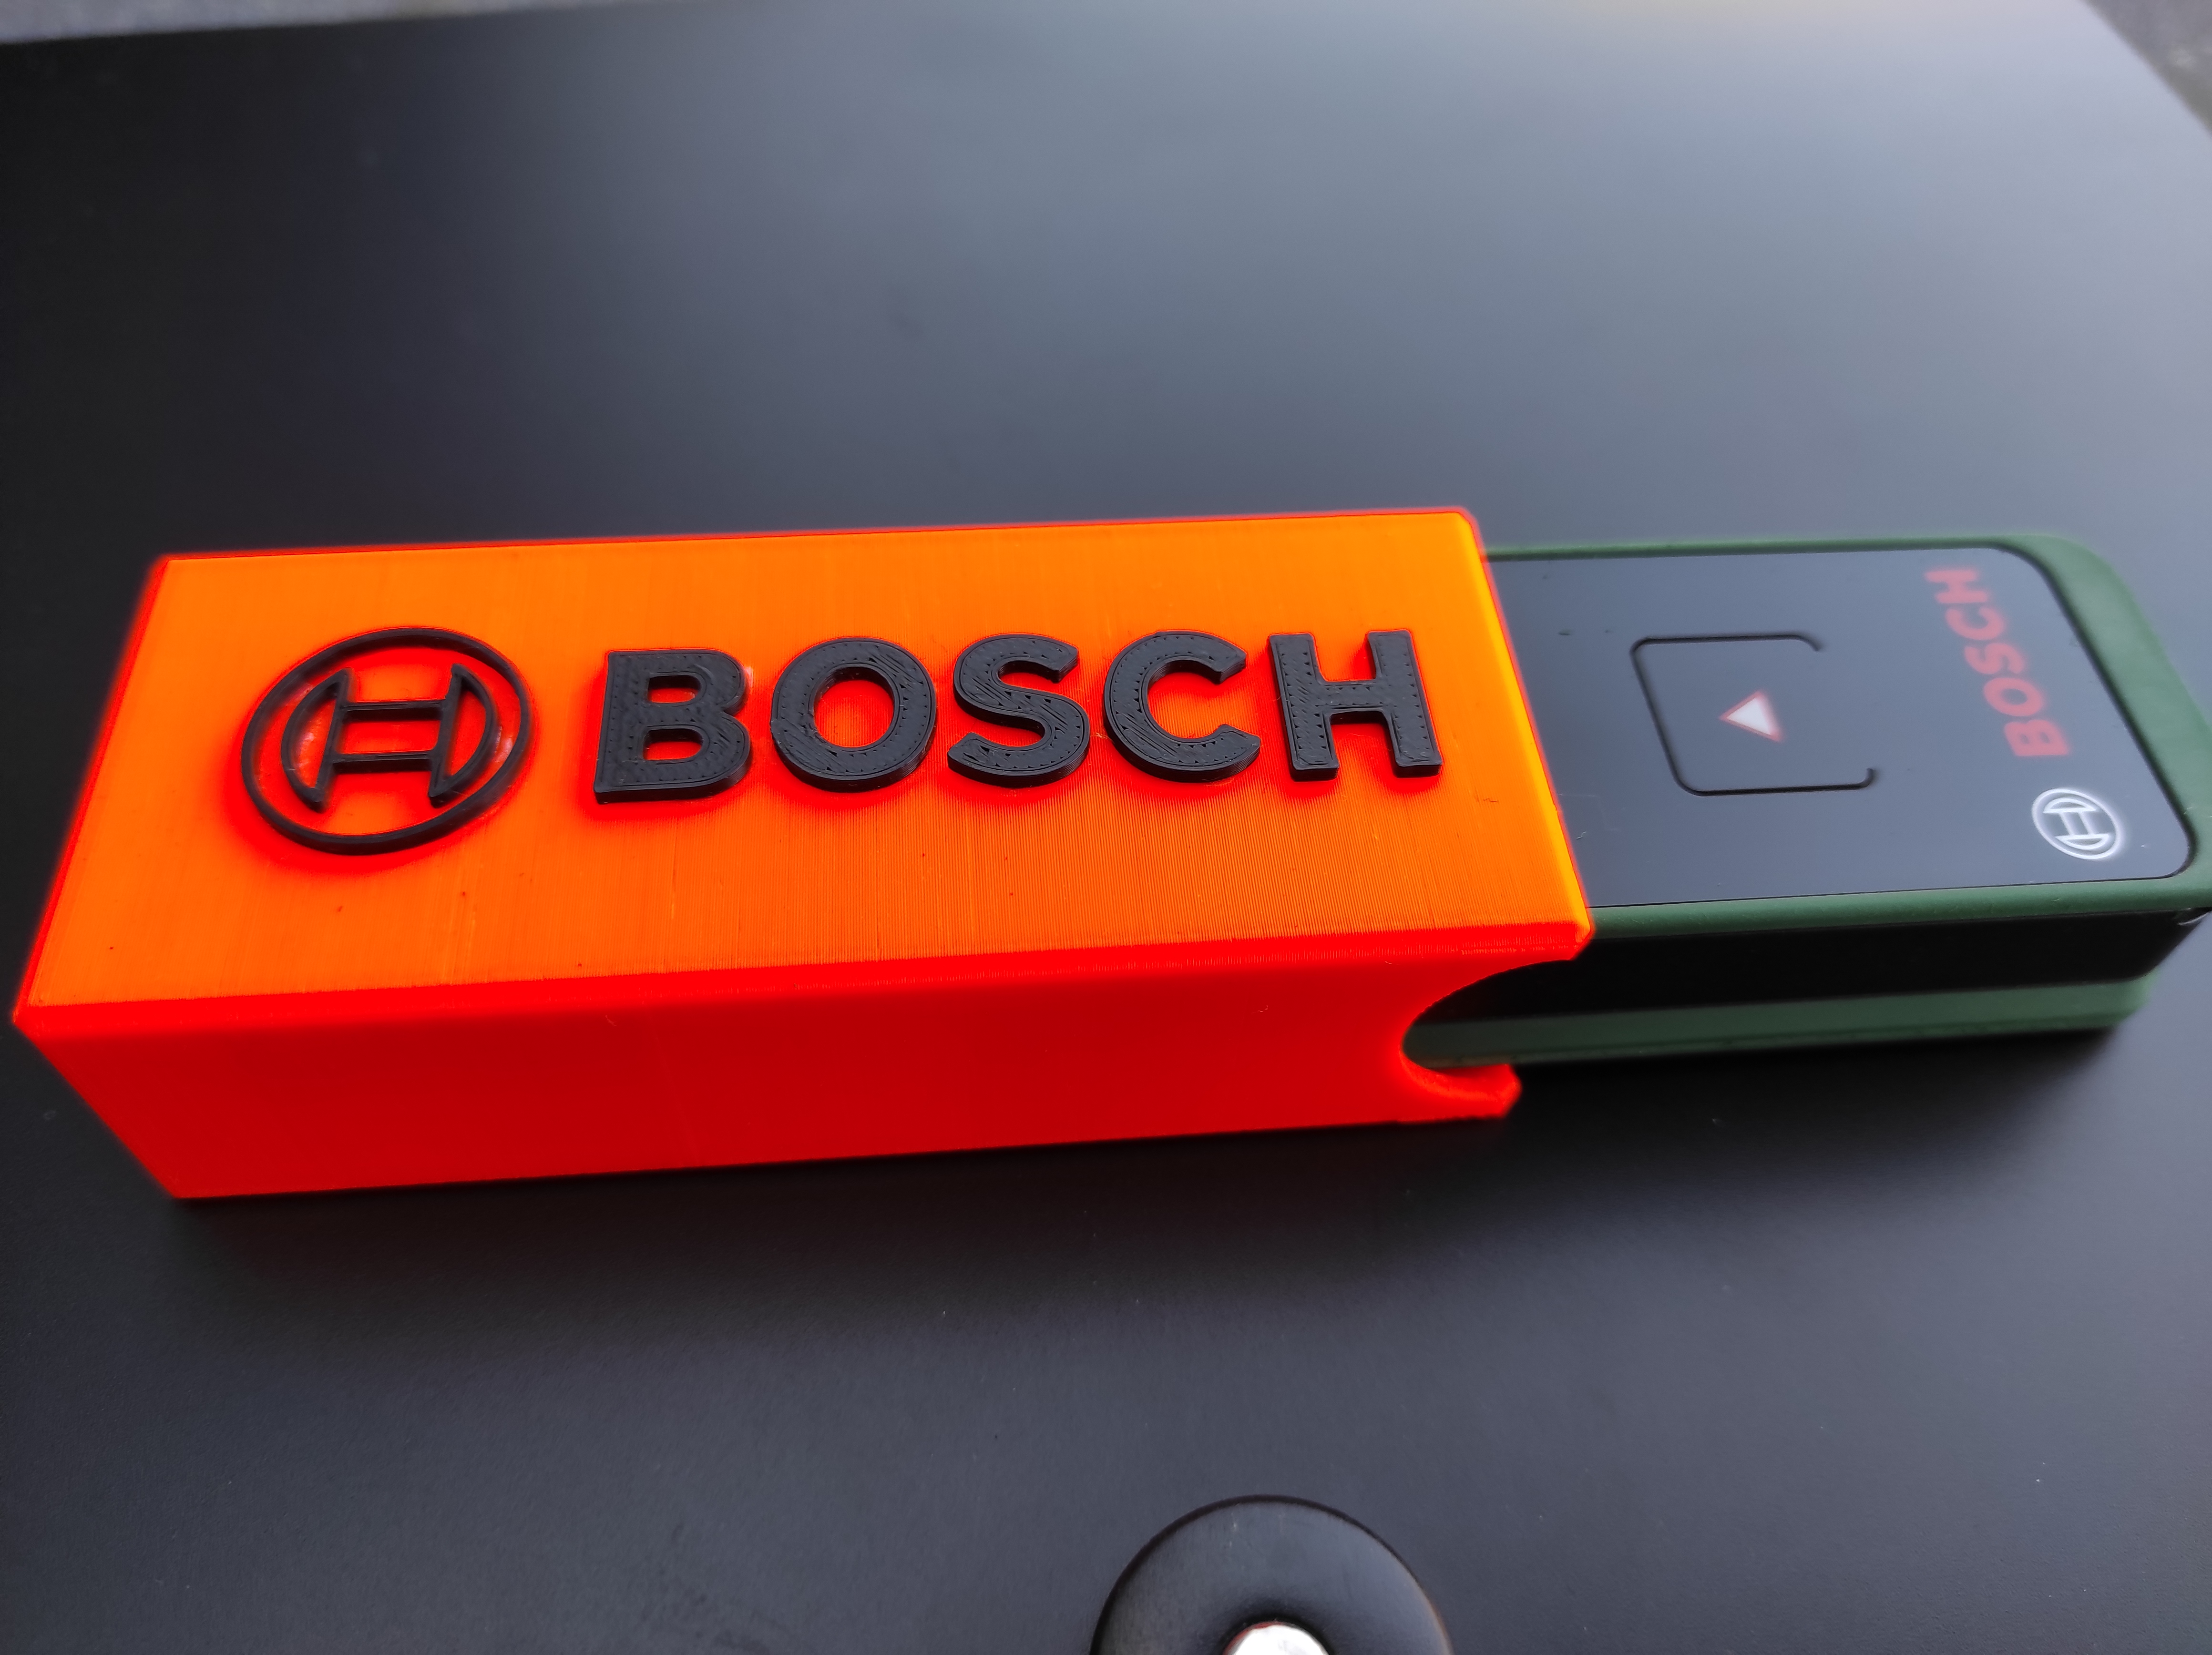 Skadis • Bosch Zamo Laser Measure by Alexandre Collet, Download free STL  model